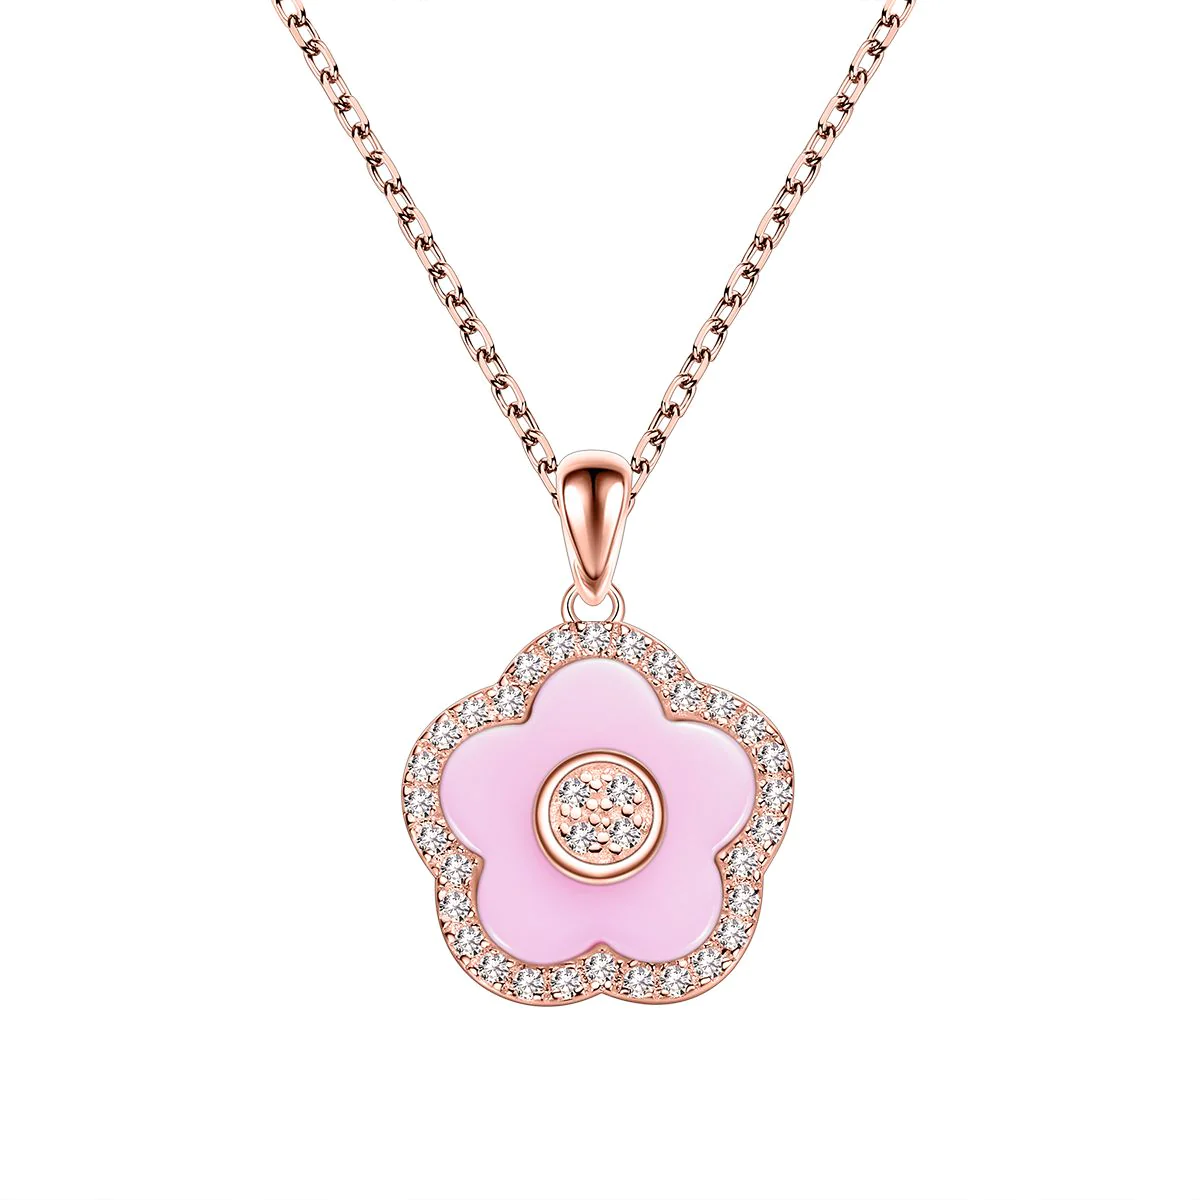 Pink Diamond Cherry Blossom Ceramic Watch With Flower Ceramic Necklace